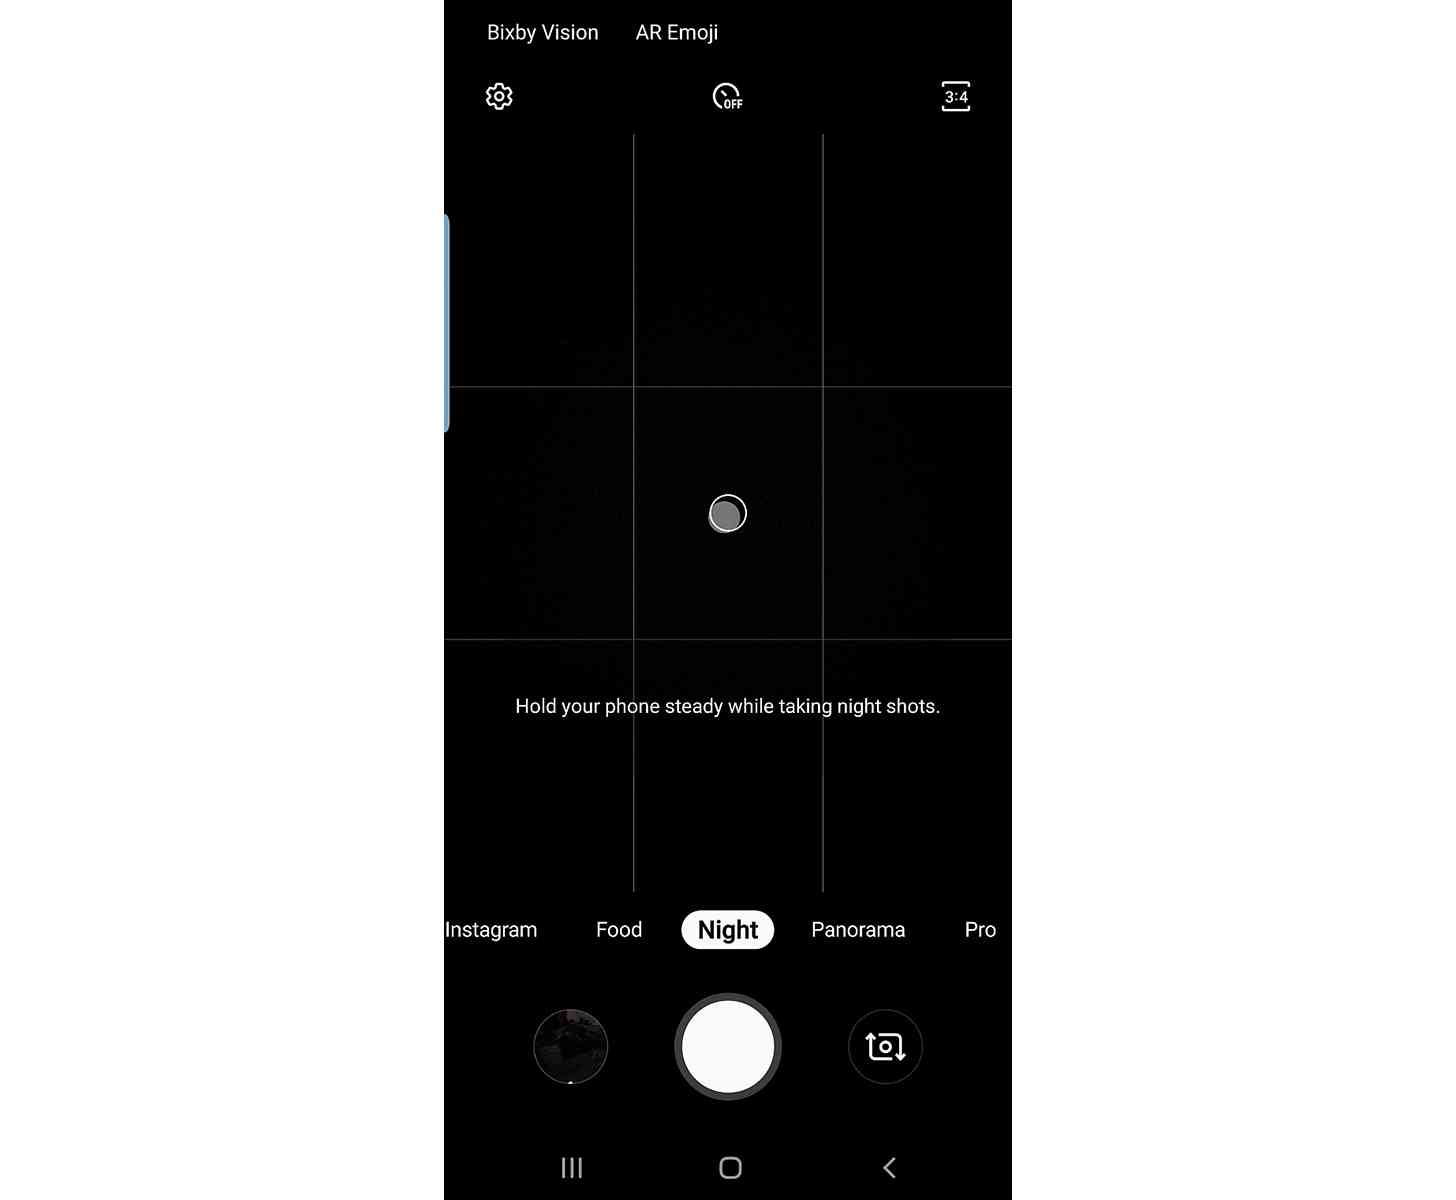 Samsung Galaxy S10 night mode camera